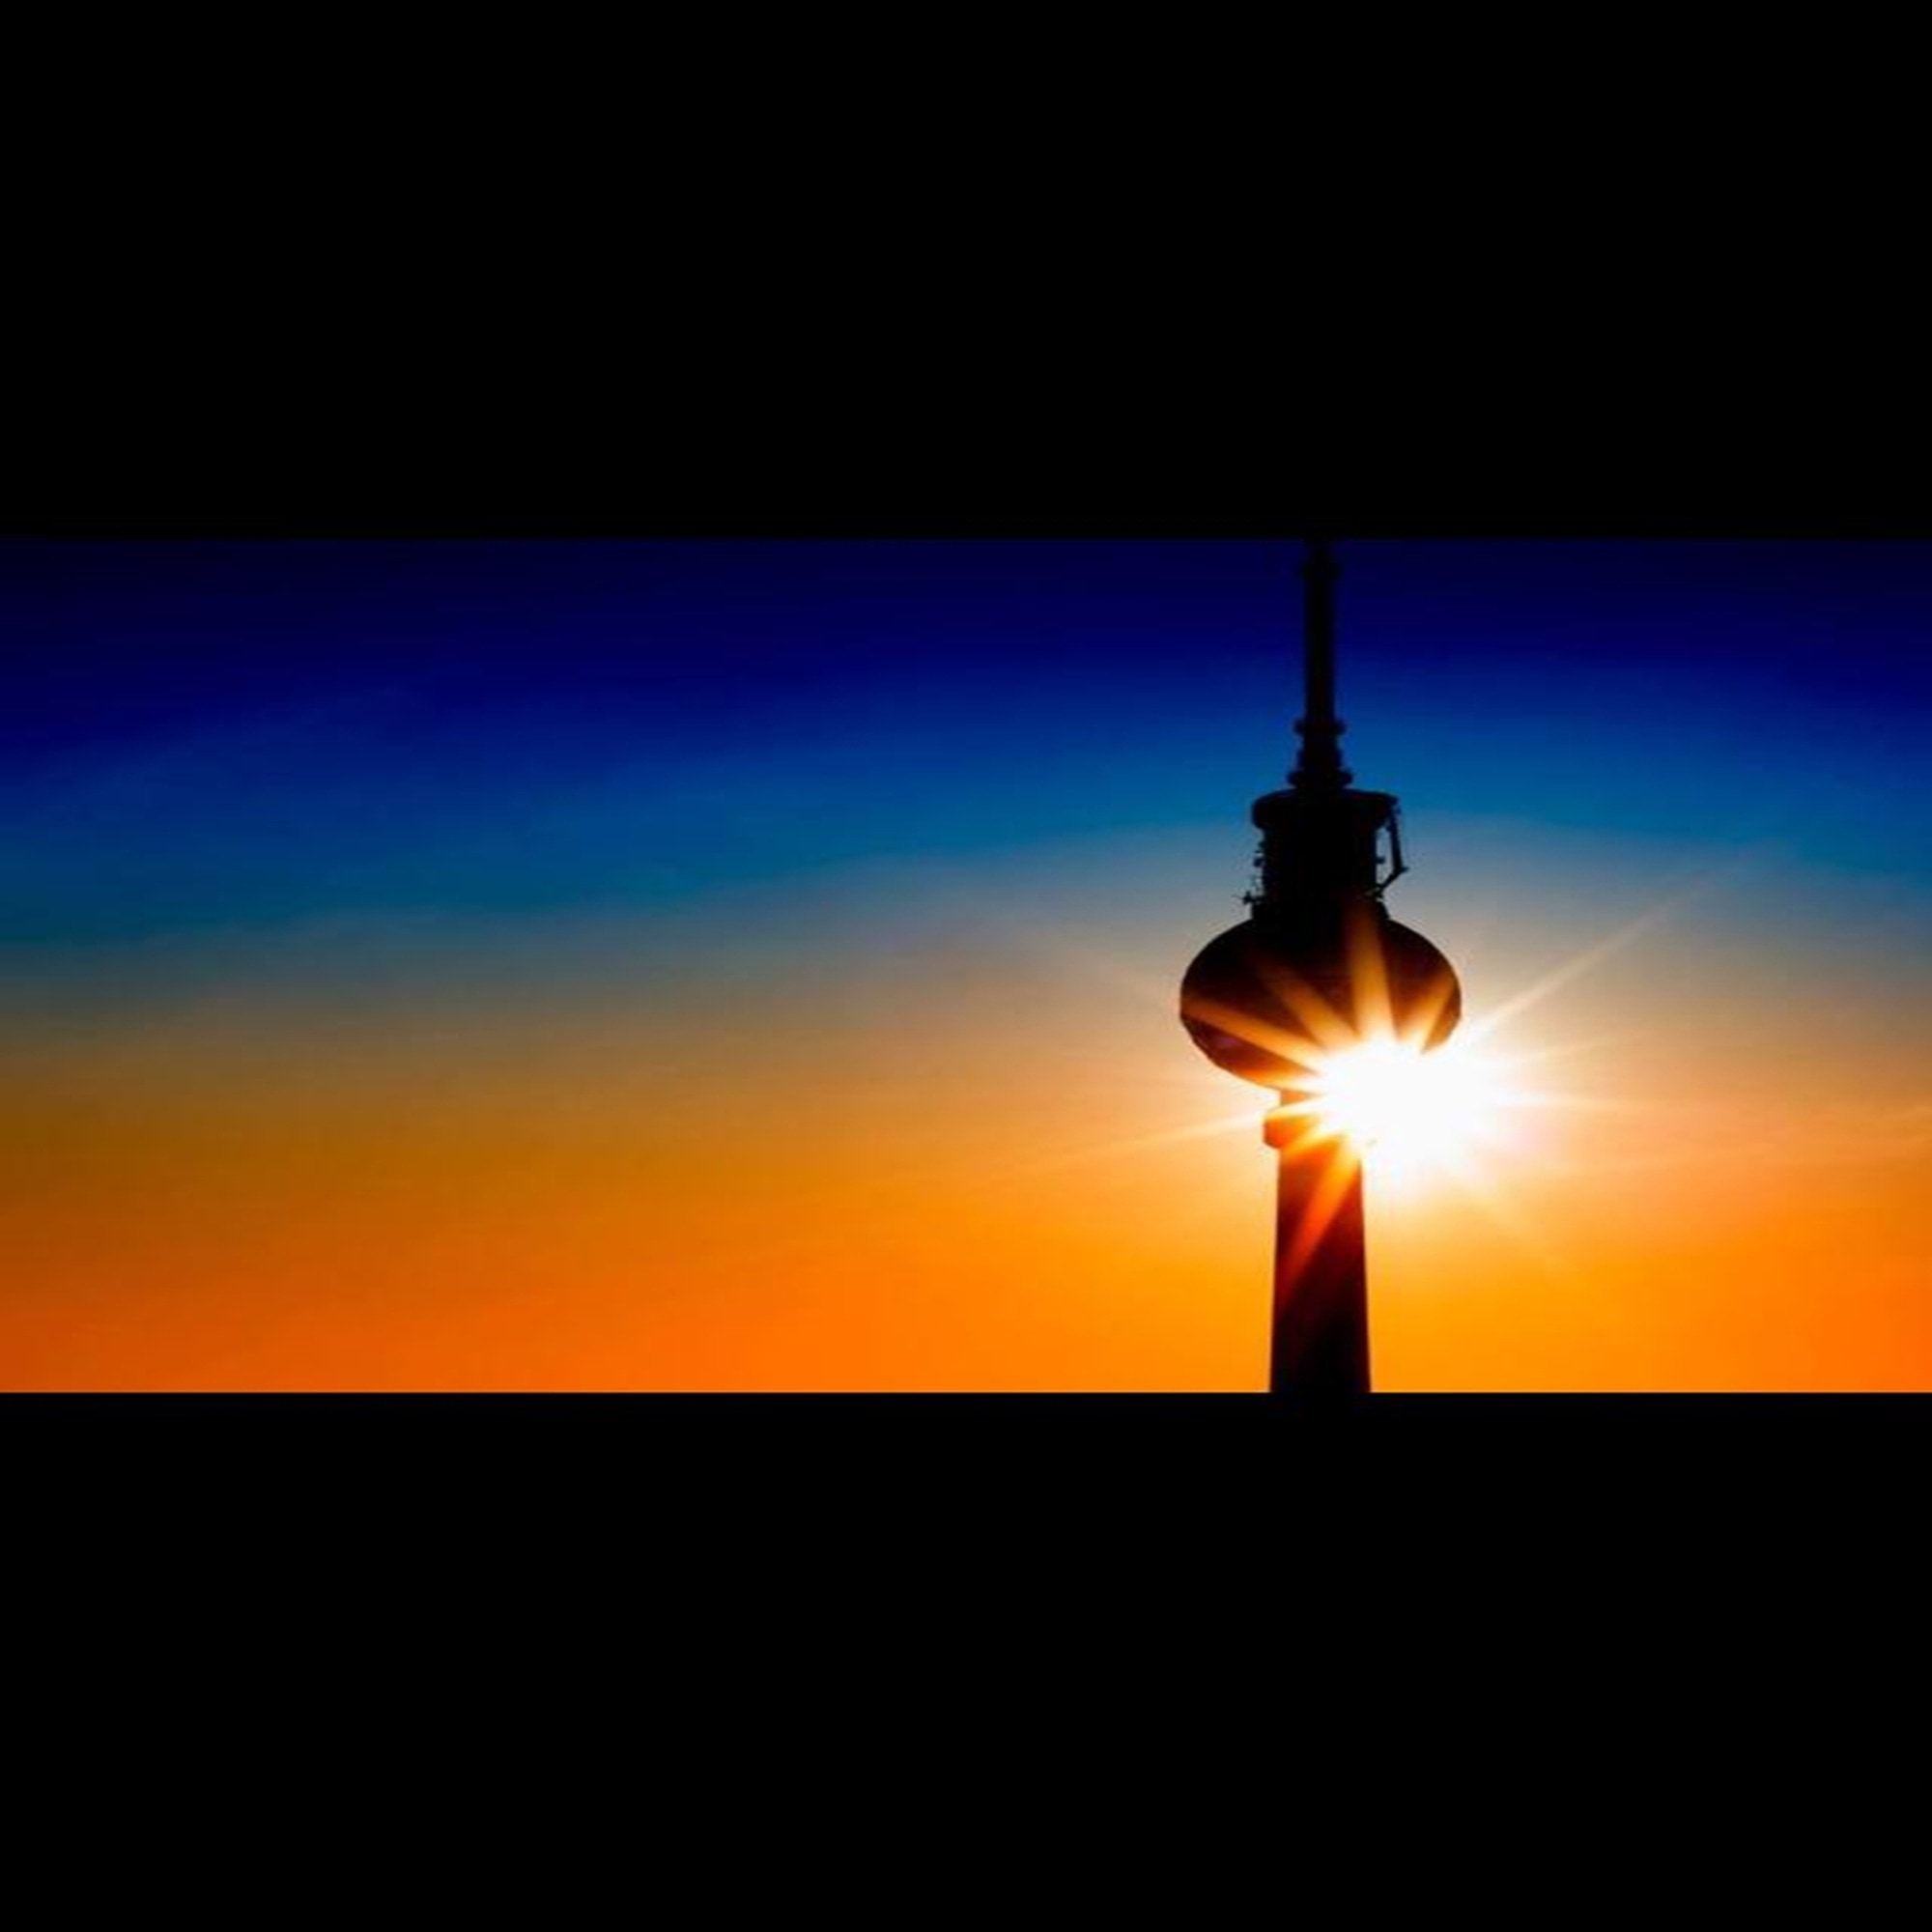 Berlin, Tv Tower, Radio Tower, Tv, illuminated, silhouette